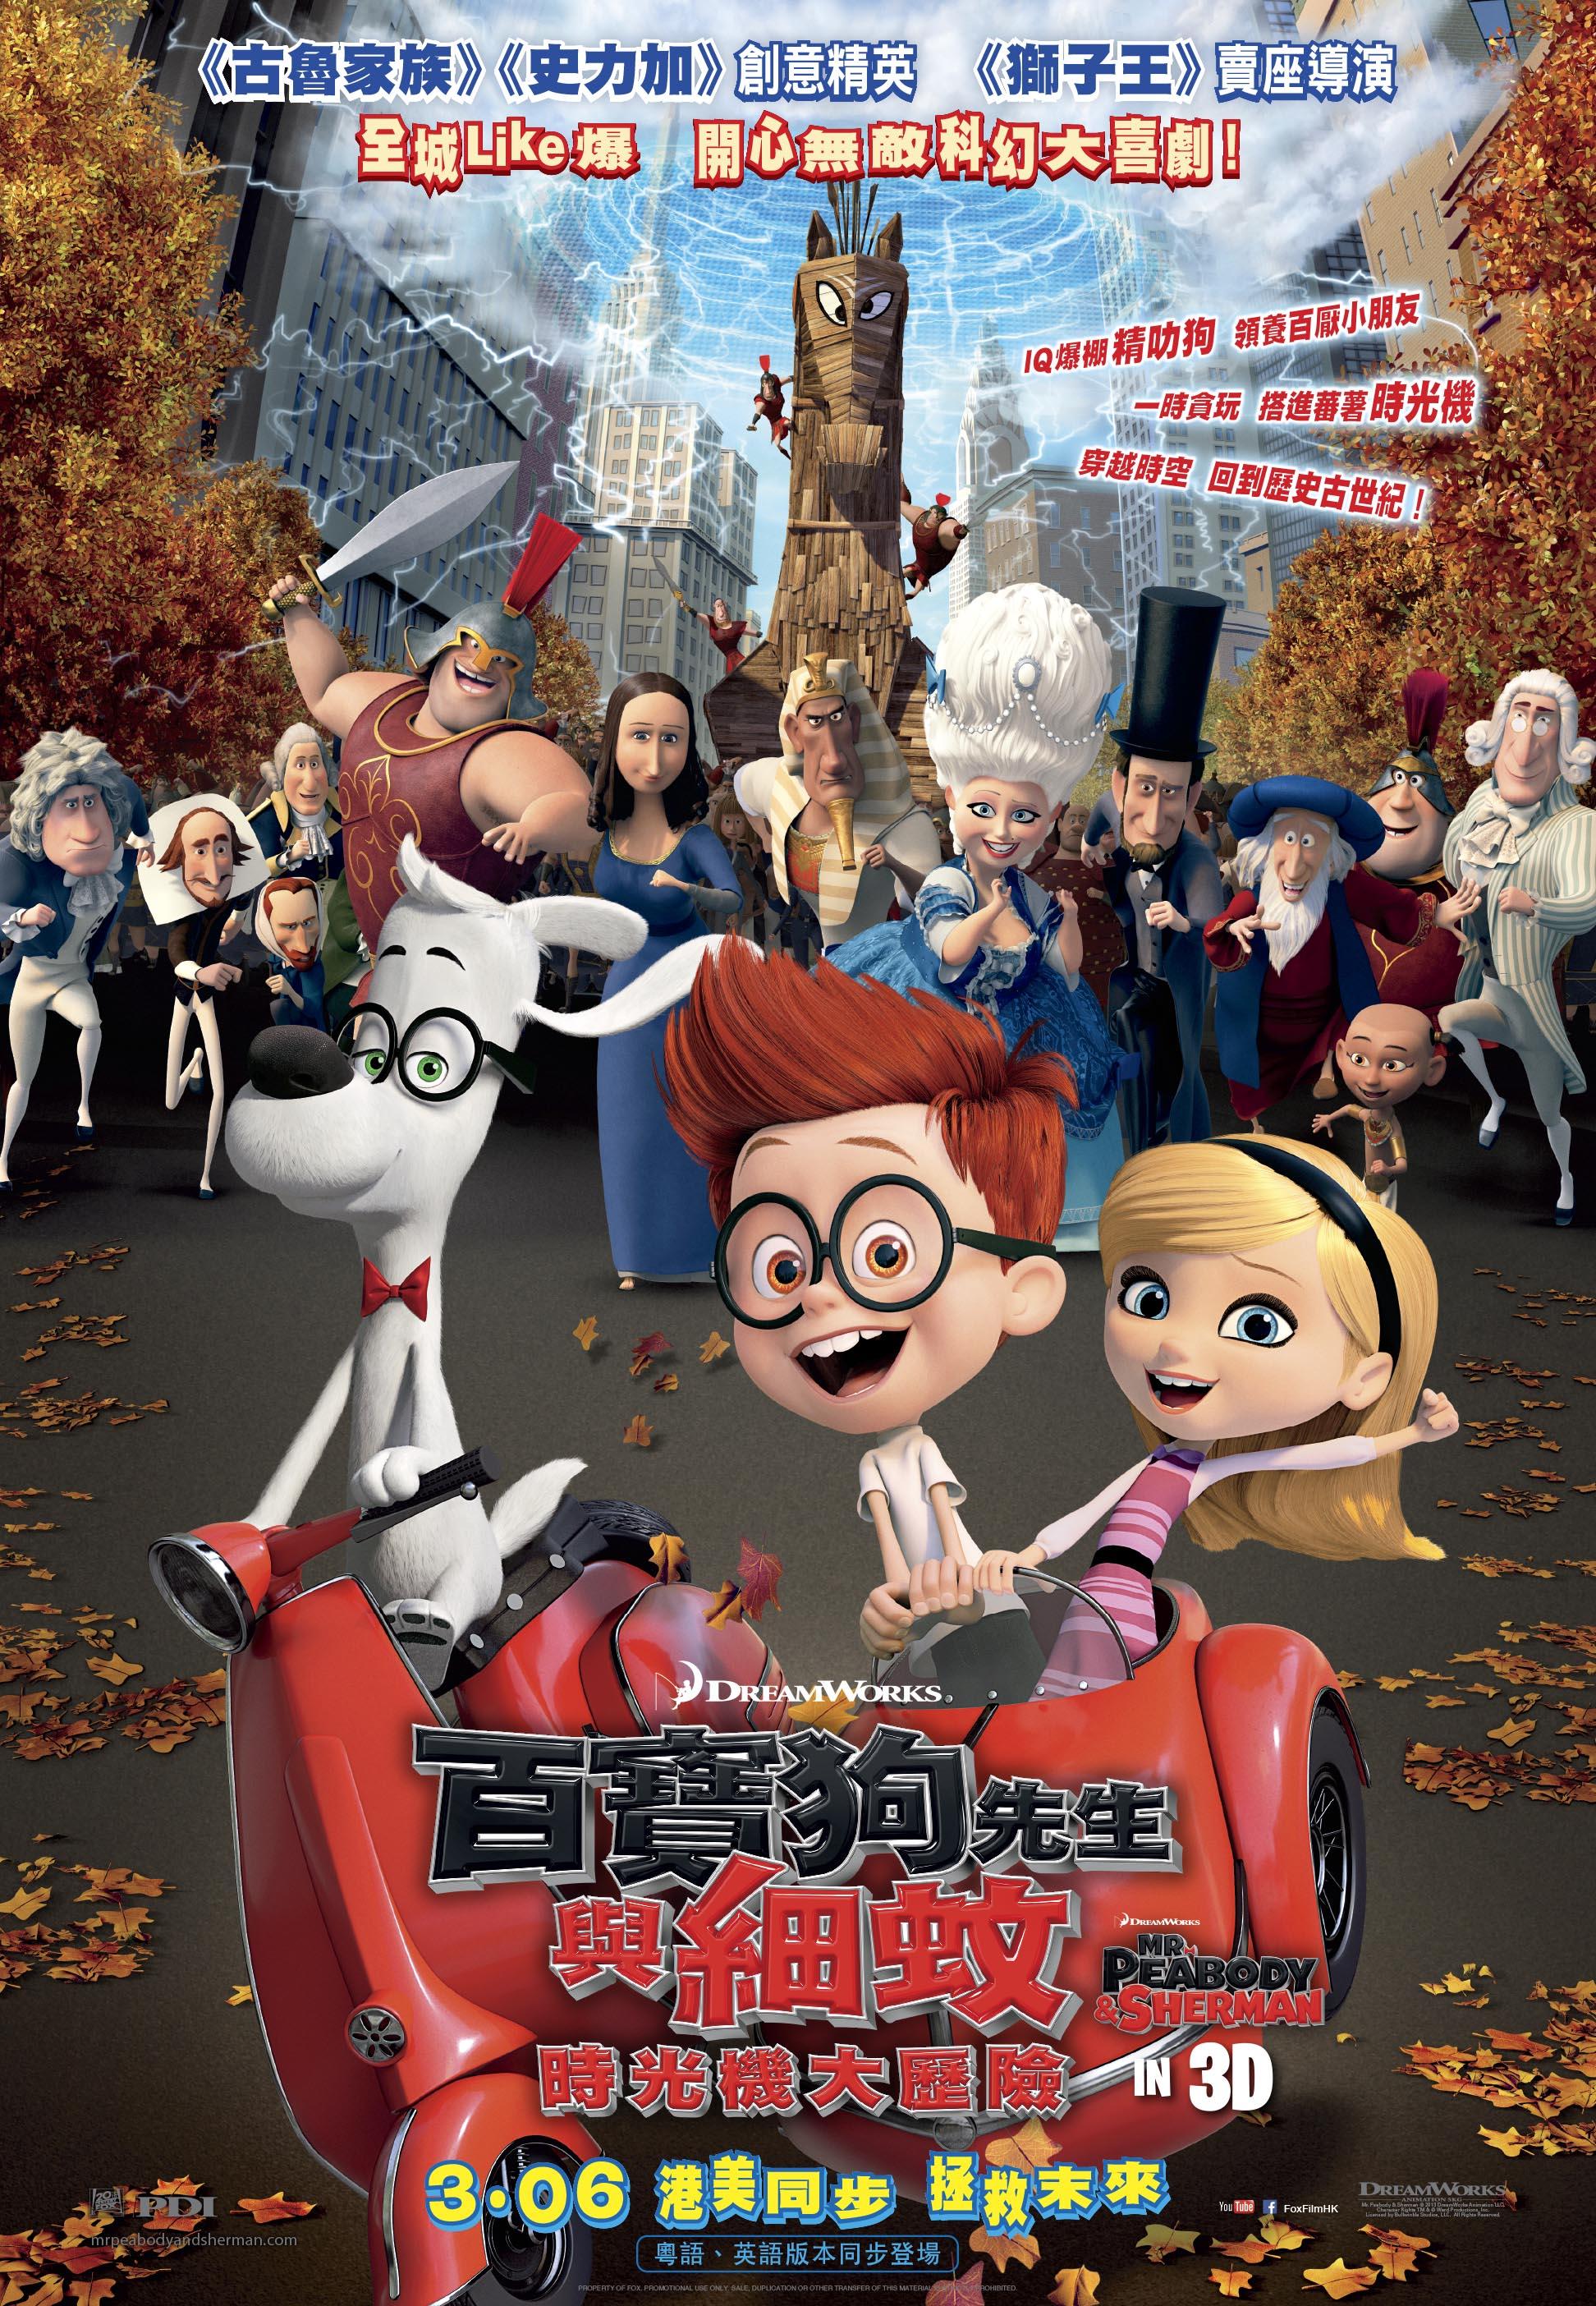 Постер фильма Приключения мистера Пибоди и Шермана | Mr. Peabody & Sherman